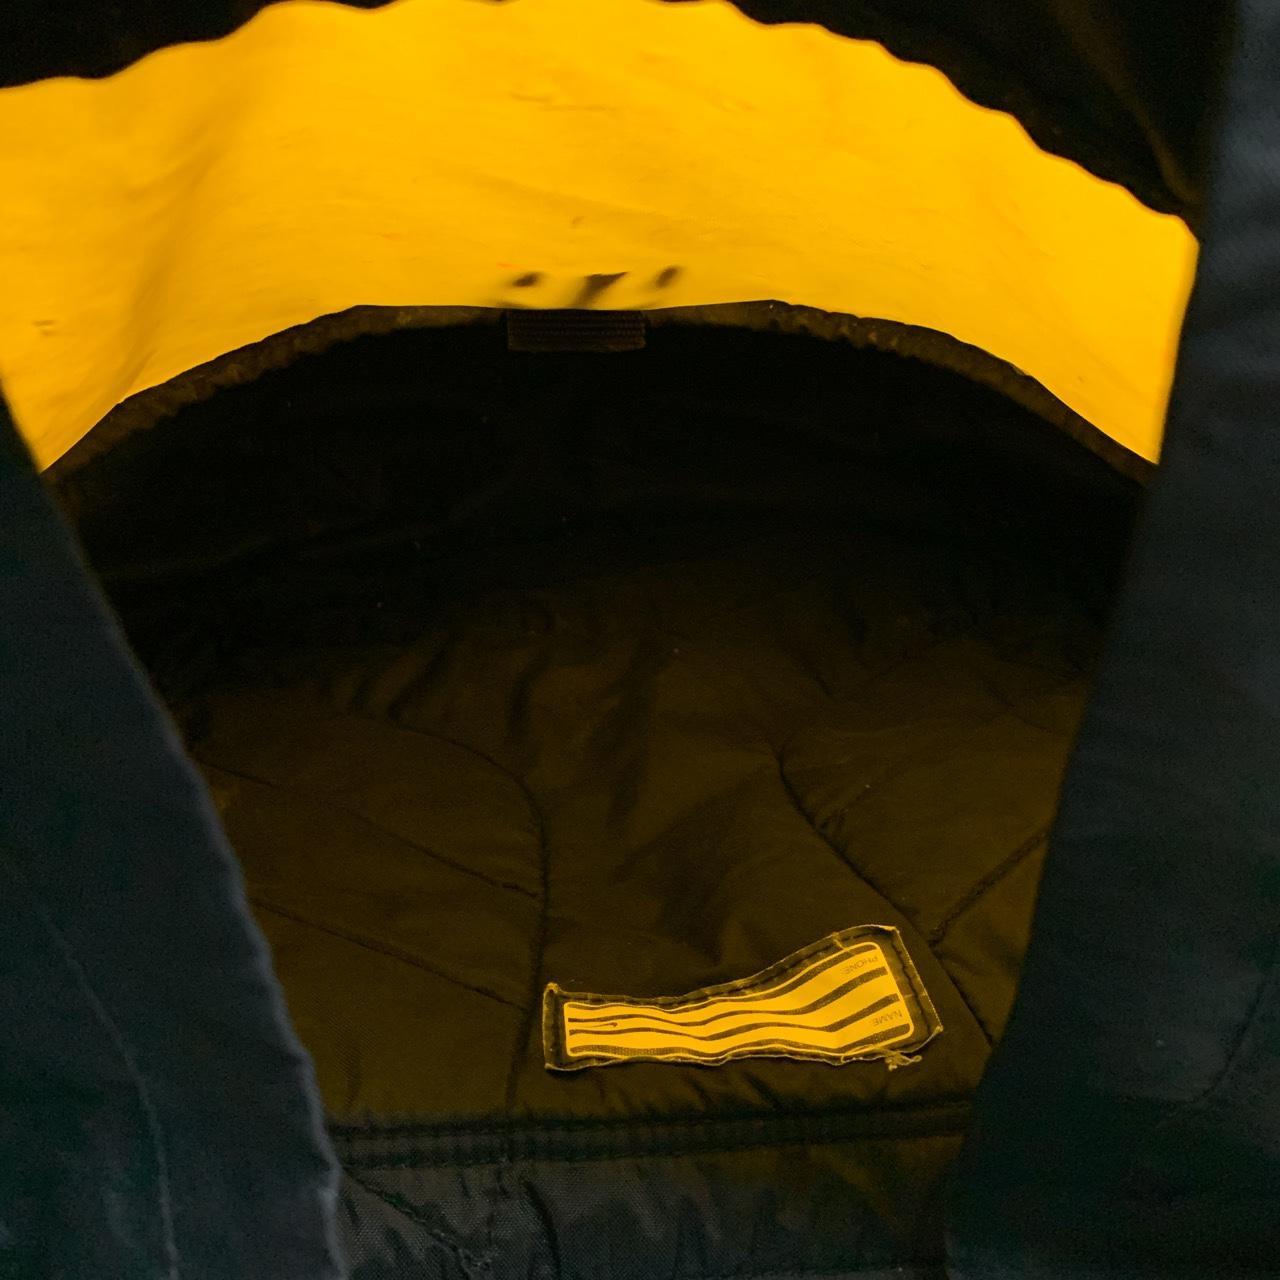 Nike 90’s Vintage Bag Rucksack Black and Yellow